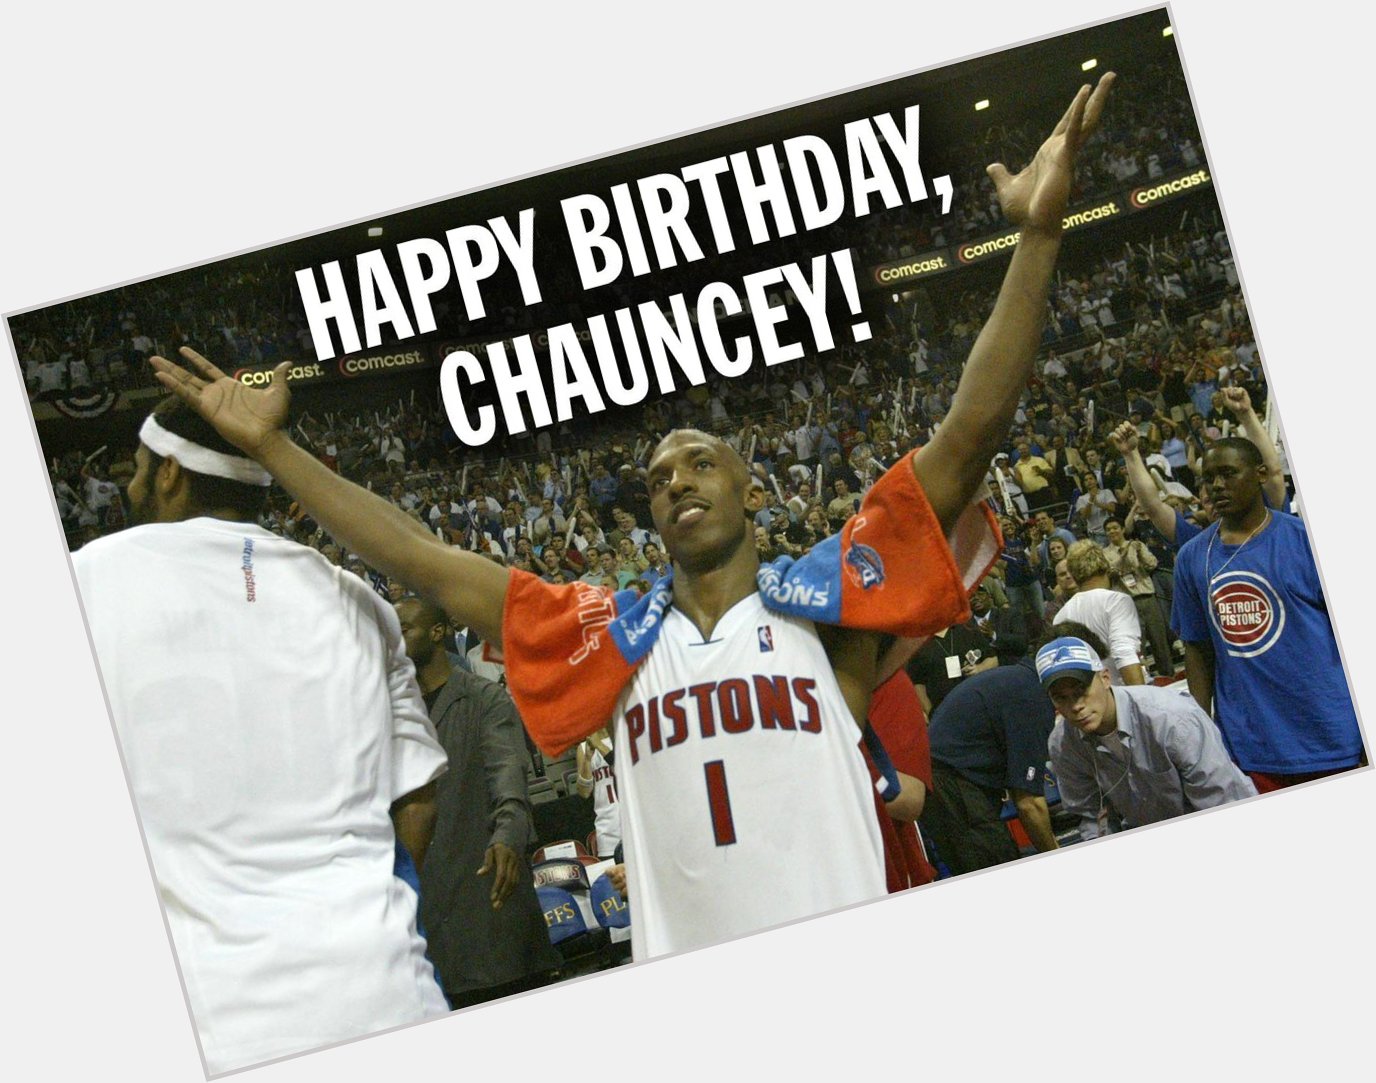 Happy birthday, Chauncey Billups! 